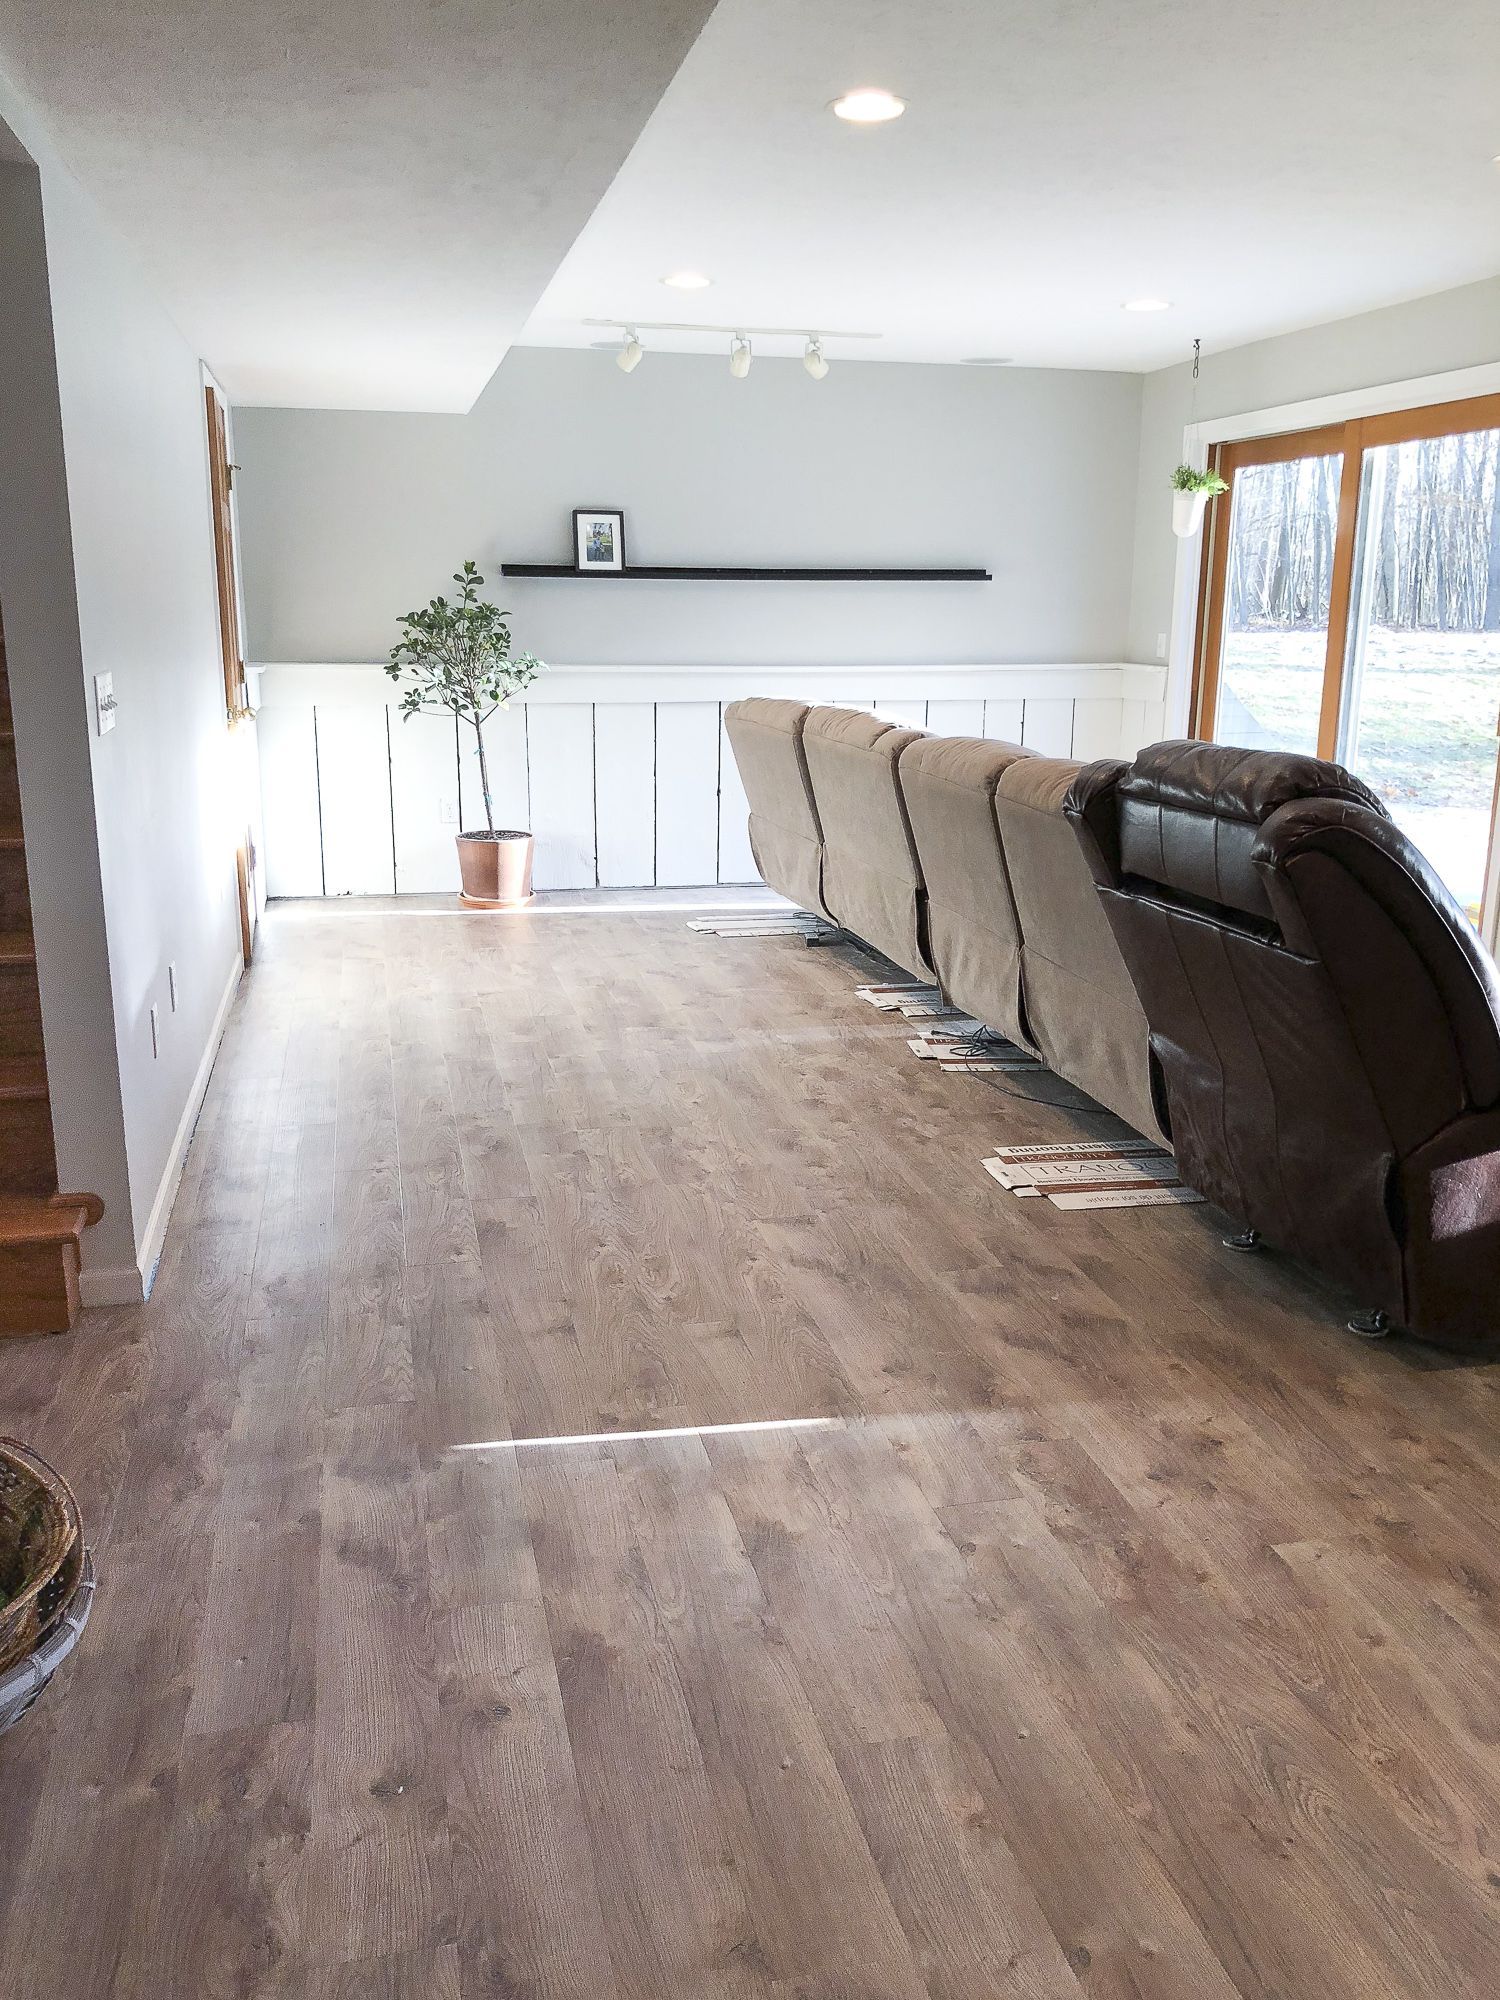 15 Diy Basement Flooring Ideas Affordable Diy Flooring Options For Basements